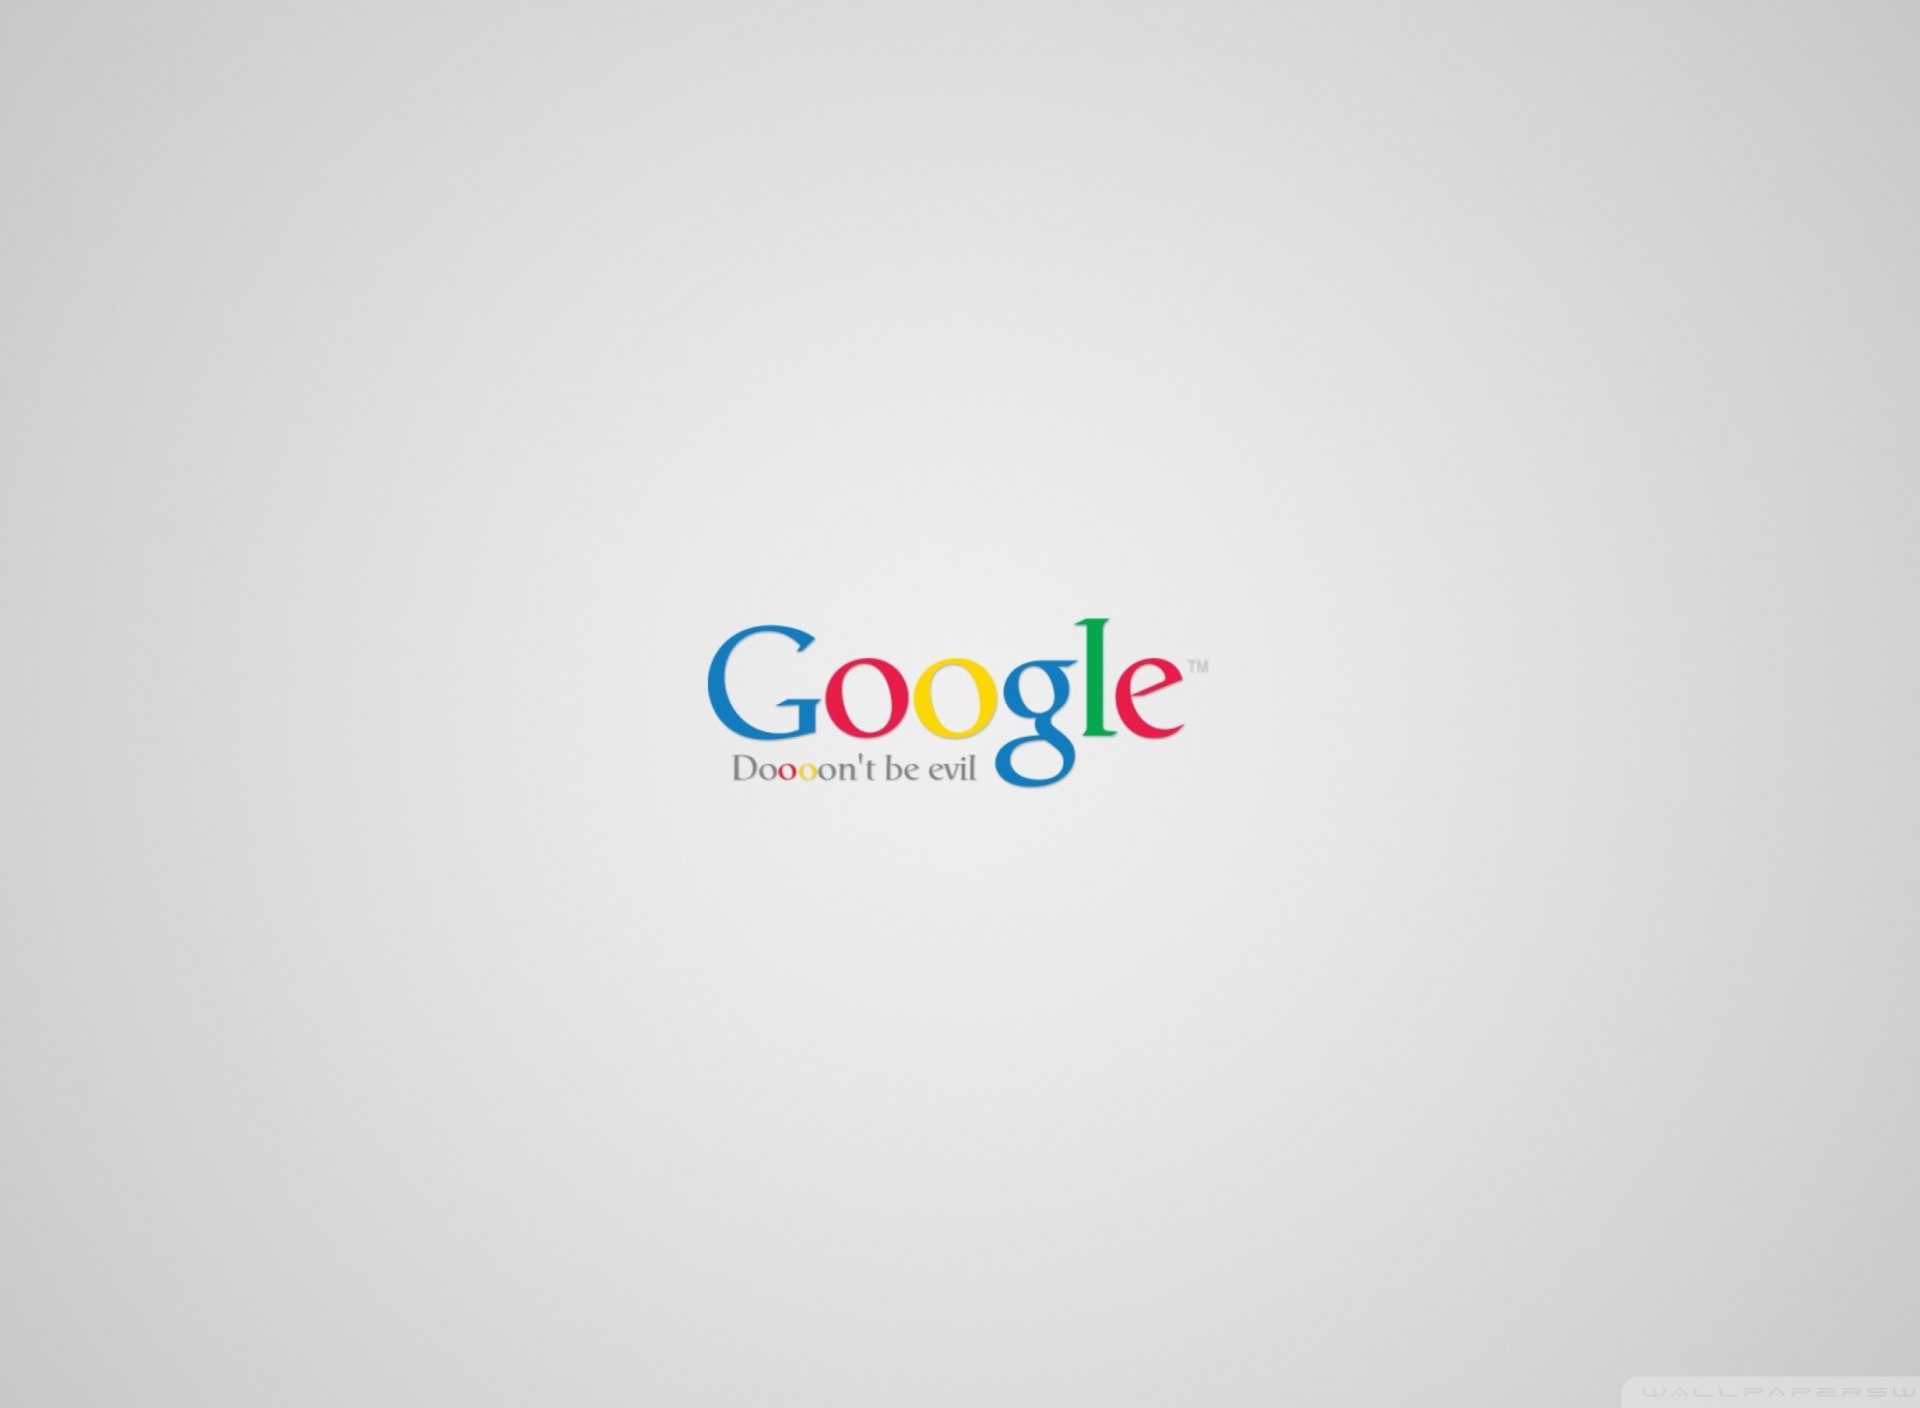 Google - Don't be evil screenshot #1 1920x1408